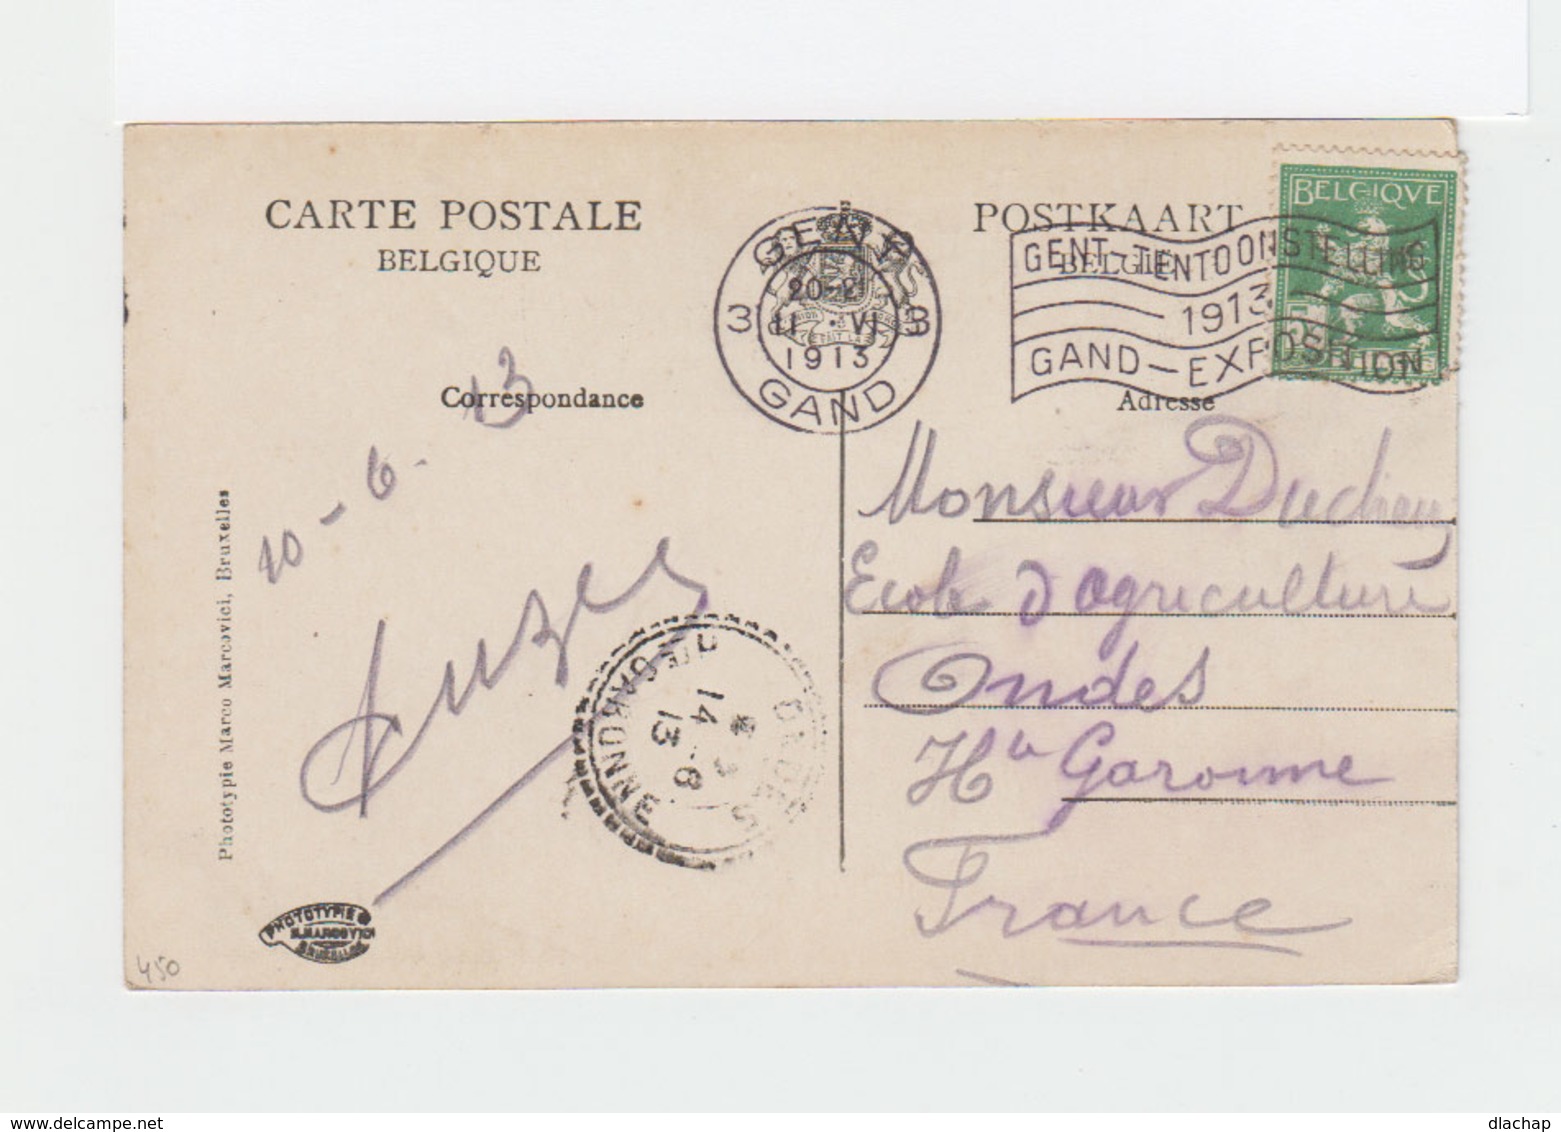 Sur Carte Postale Flamme Gand Exposition 1913. CAD Gand 1913..CAD Ondes Haute Garonne. (1057x) - Flammes